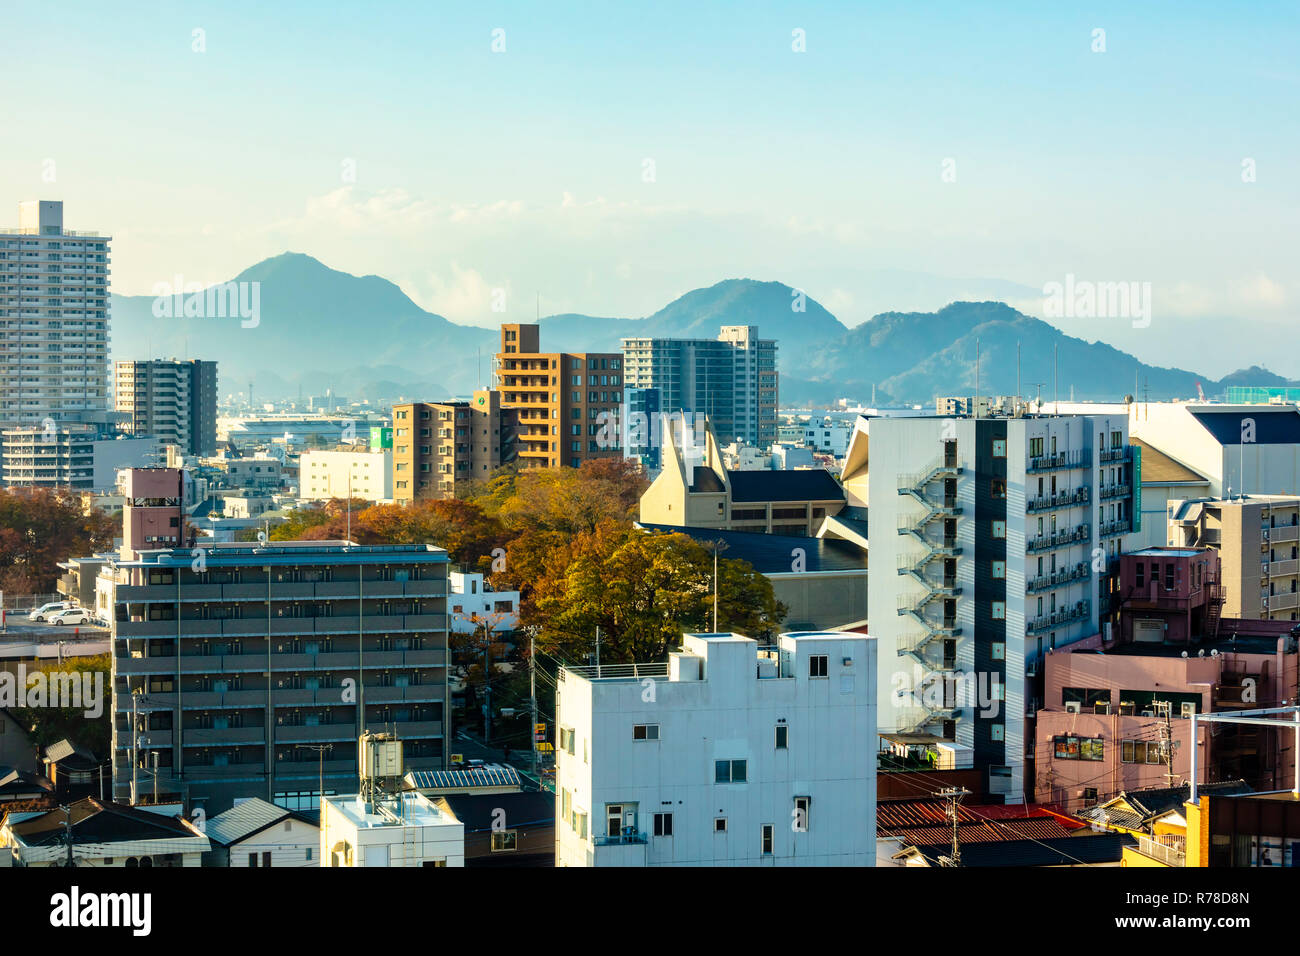 Mishima, Shizuoka / Japan - December 1 2018: Mishima modern city centre near JR railway station dense buildings with mountains in background Stock Photo